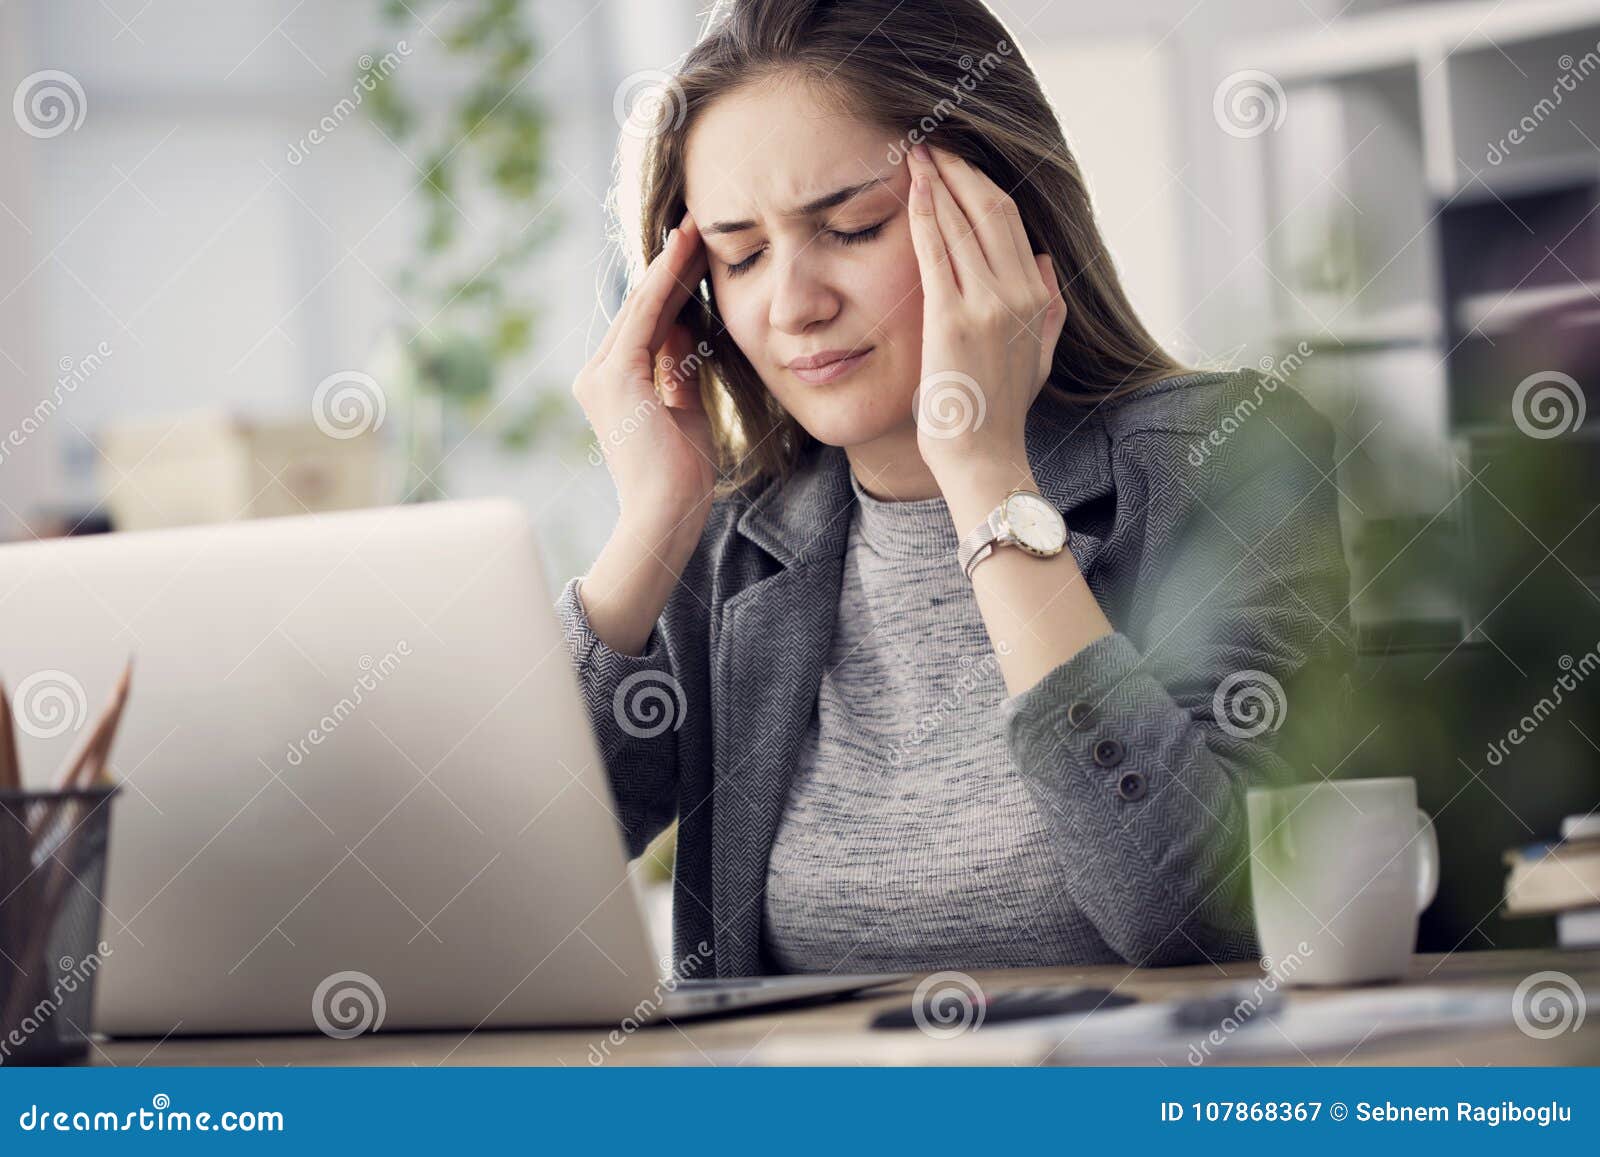 working woman have a headache